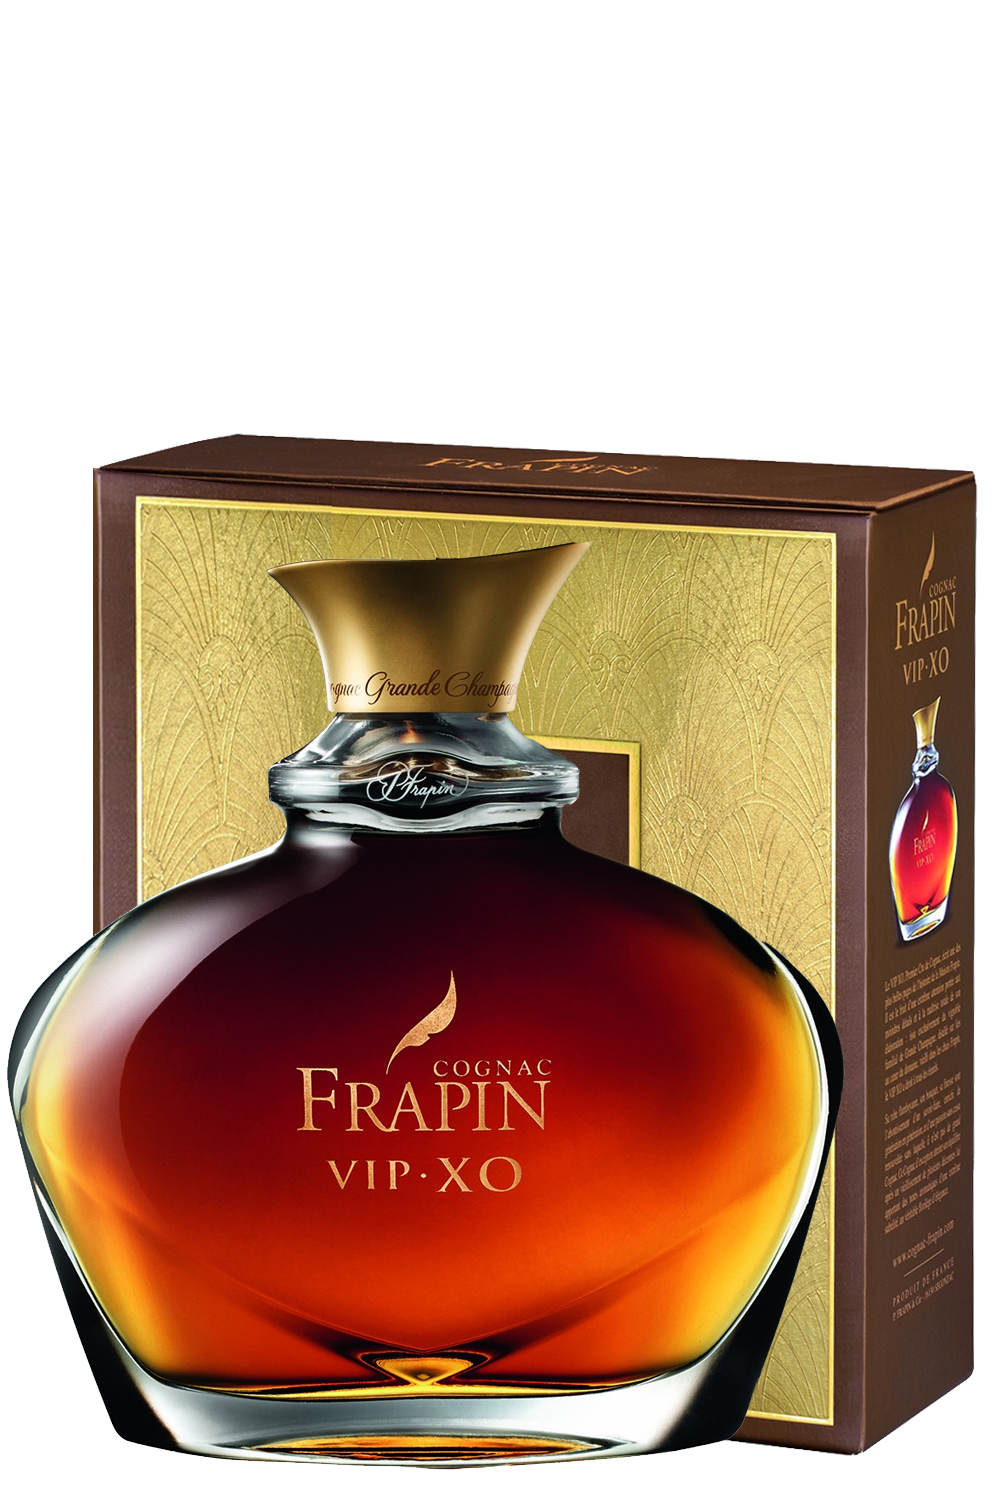 Frapin 0.7. Frapin Cognac. Коньяк Фрапен Хо 0.7. Коньяк Frapin. Frapin VSOP.